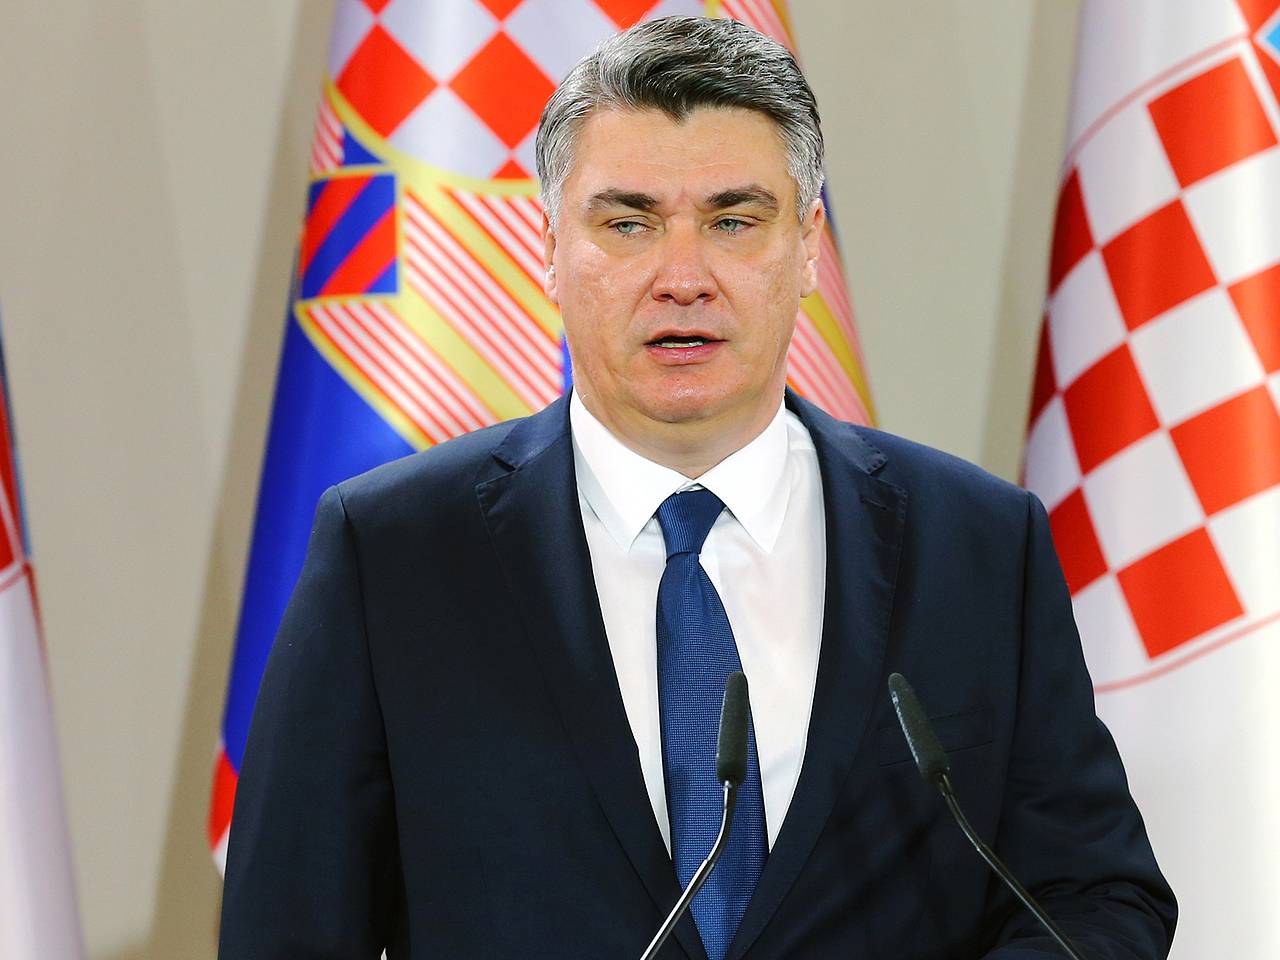 зоран миланович президент хорватии отказался извиняться